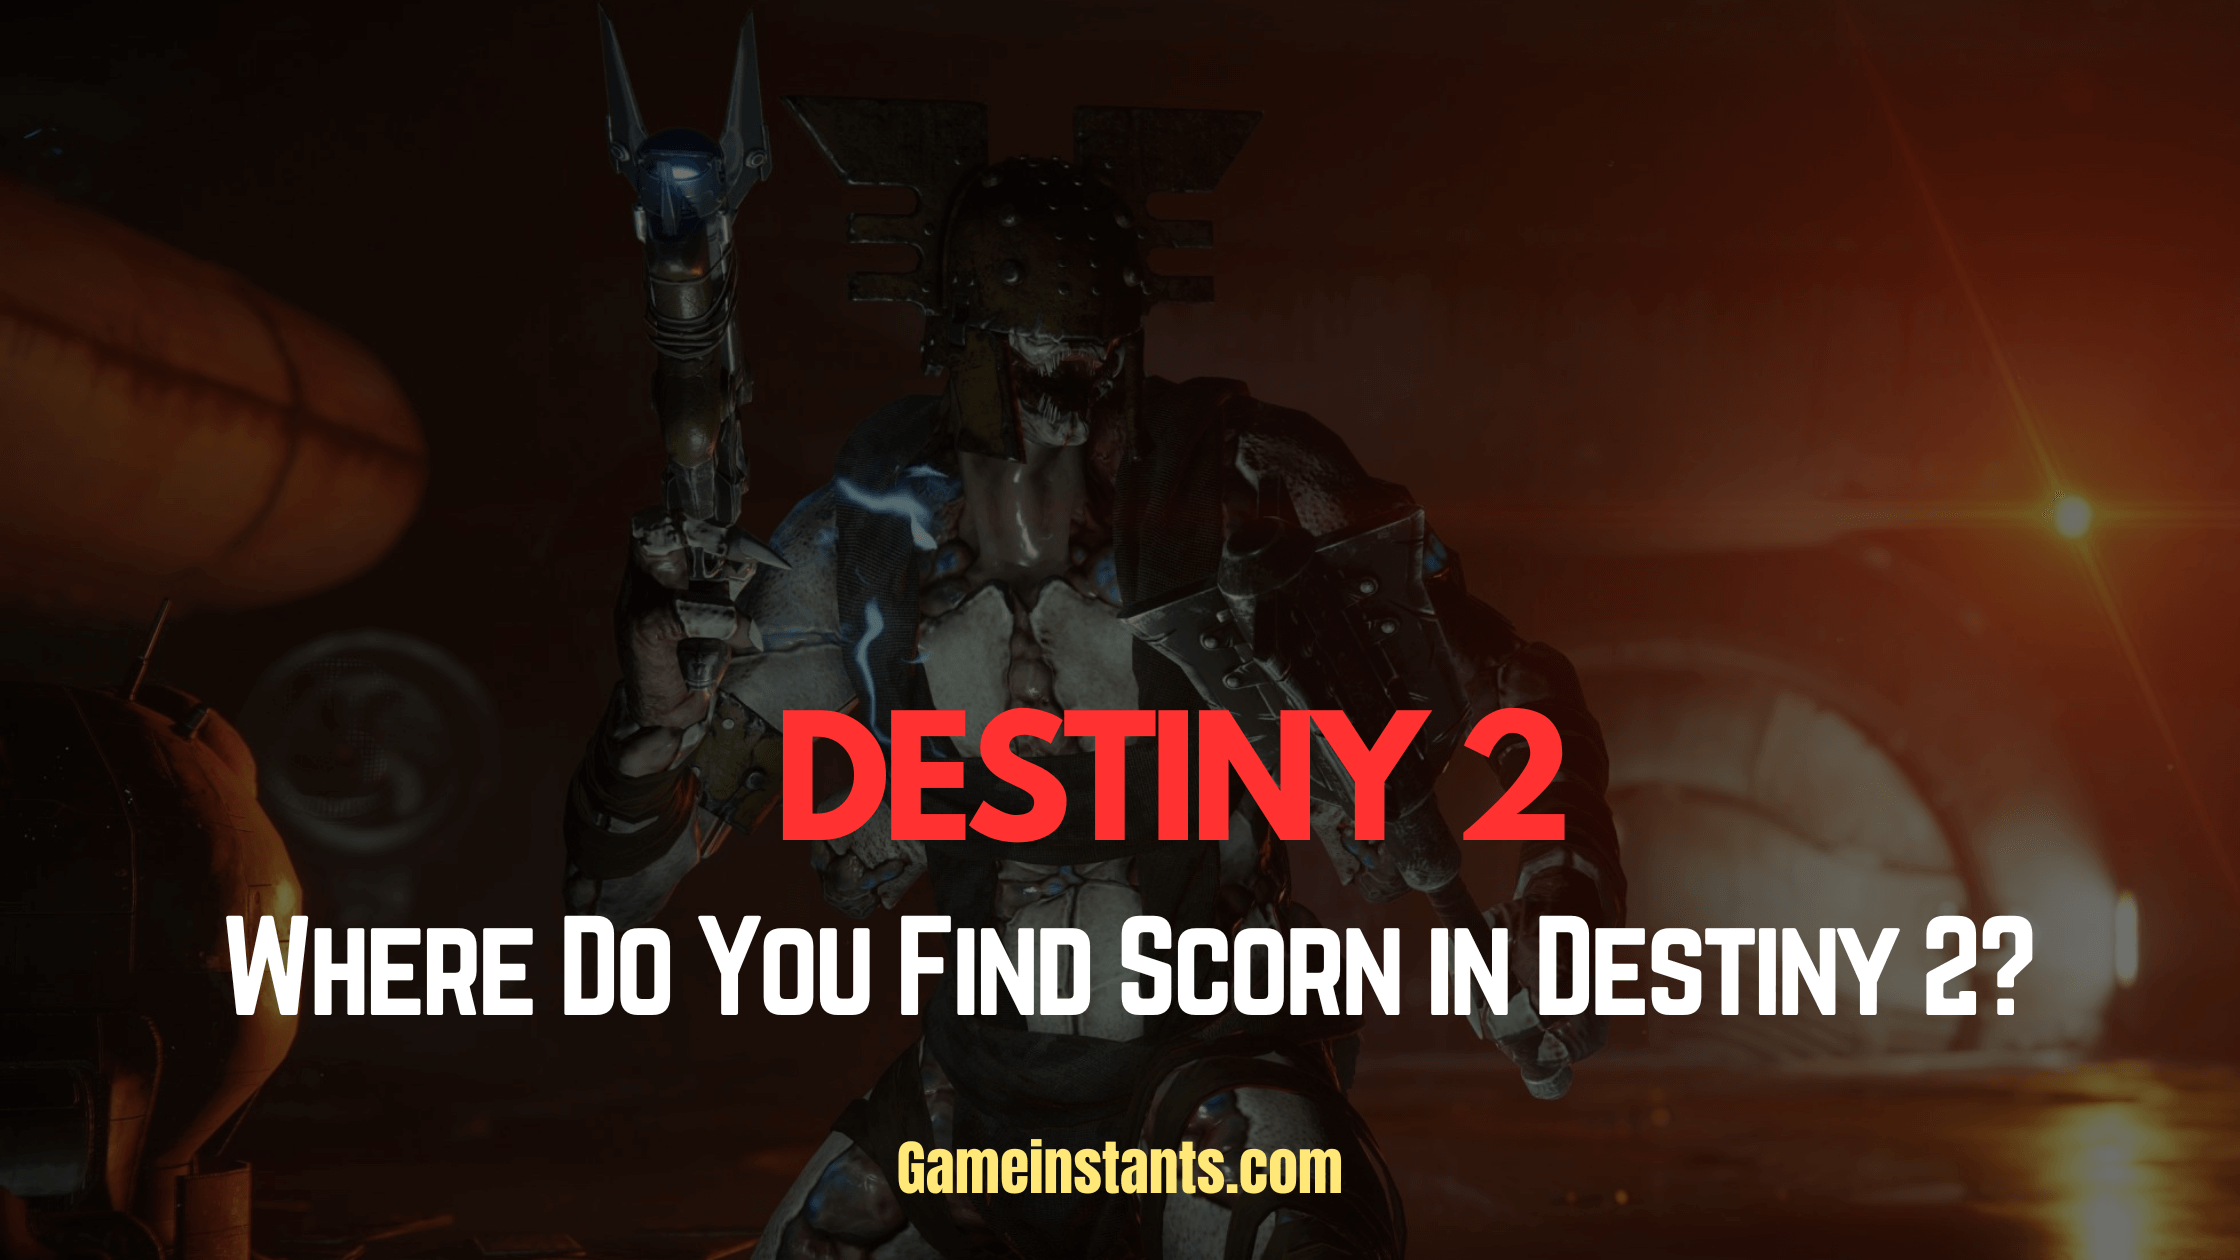 Where Do You Find Scorn in Destiny 2